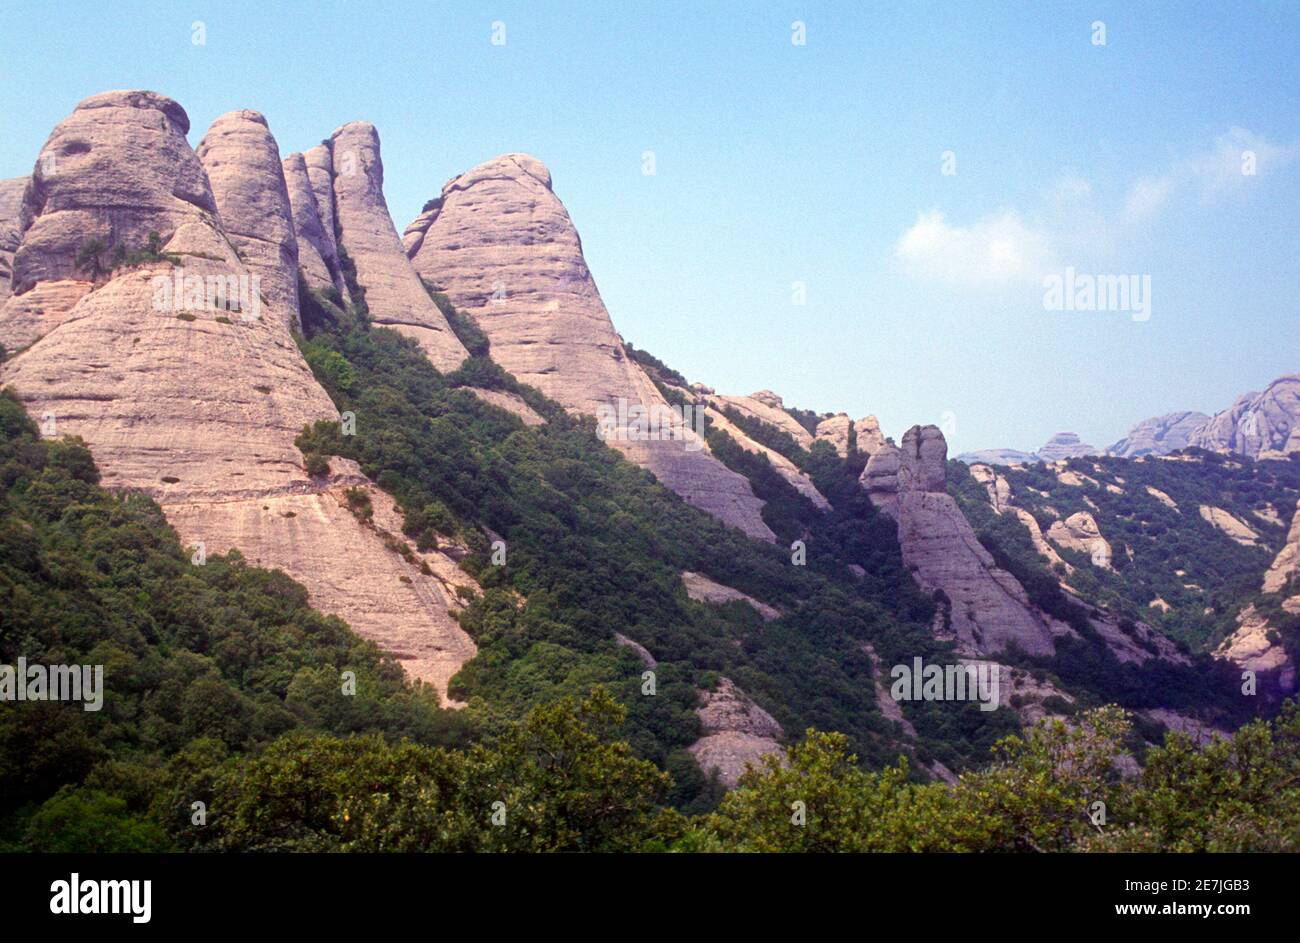 1983 Montserrat Spain  -Montserrat is a multi-peaked mountain range near Barcelona, in Catalonia, Spain. It is part of the Catalan Pre-Coastal Range. The main peaks are Sant Jeroni (1,236 m), Montgrós (1,120 m) and Miranda de les Agulles (903m) Montserrat in Monistrol de Montserrat, Catalonia, Spain Stock Photo